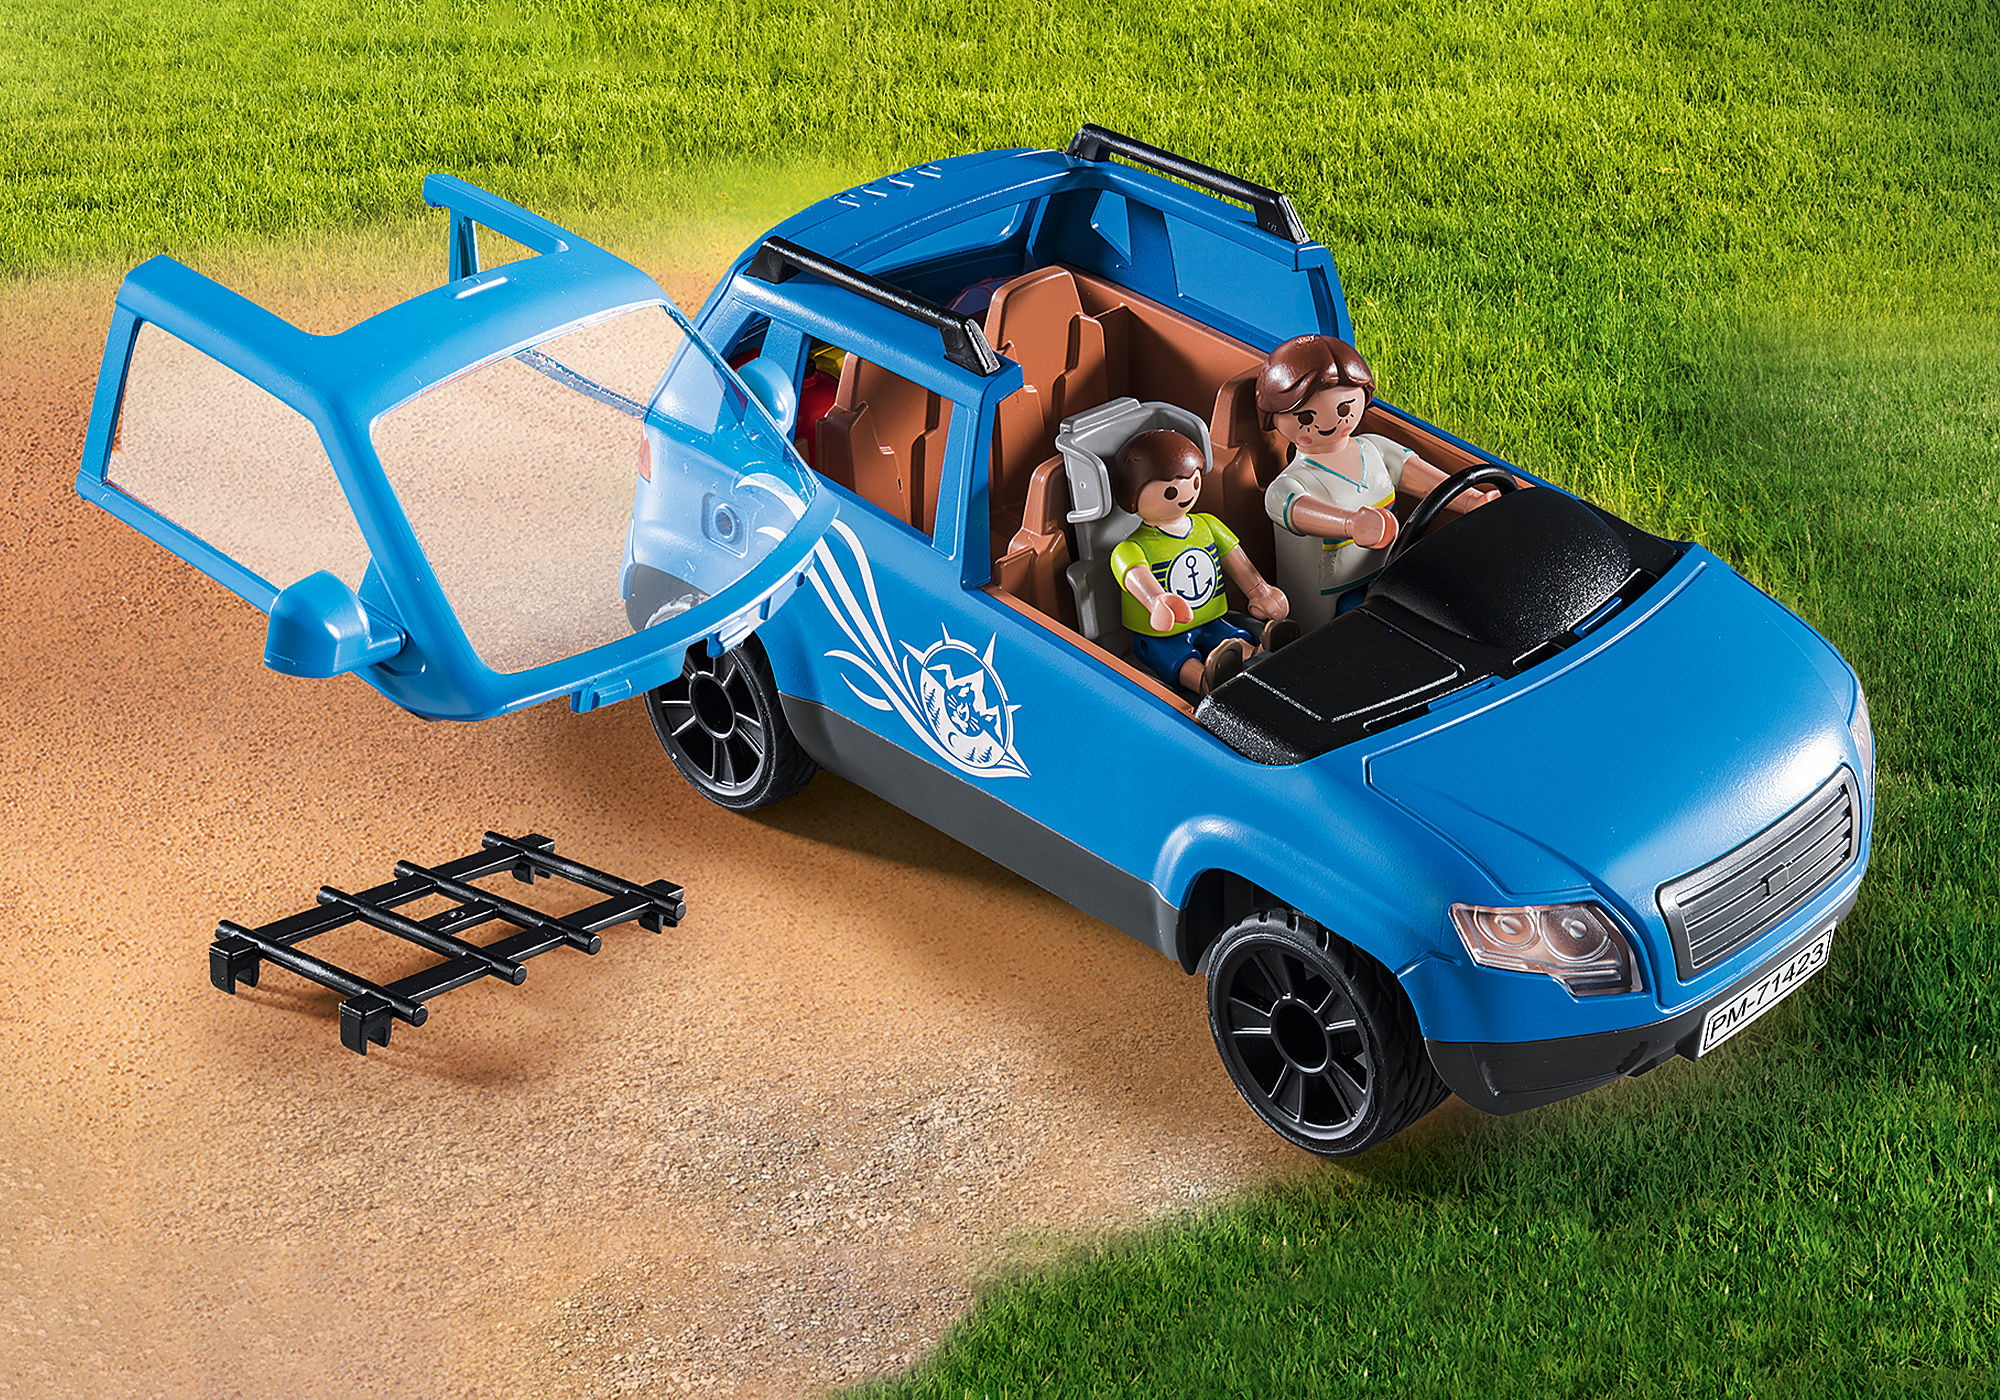 Playmobil - Famille avec camping-car